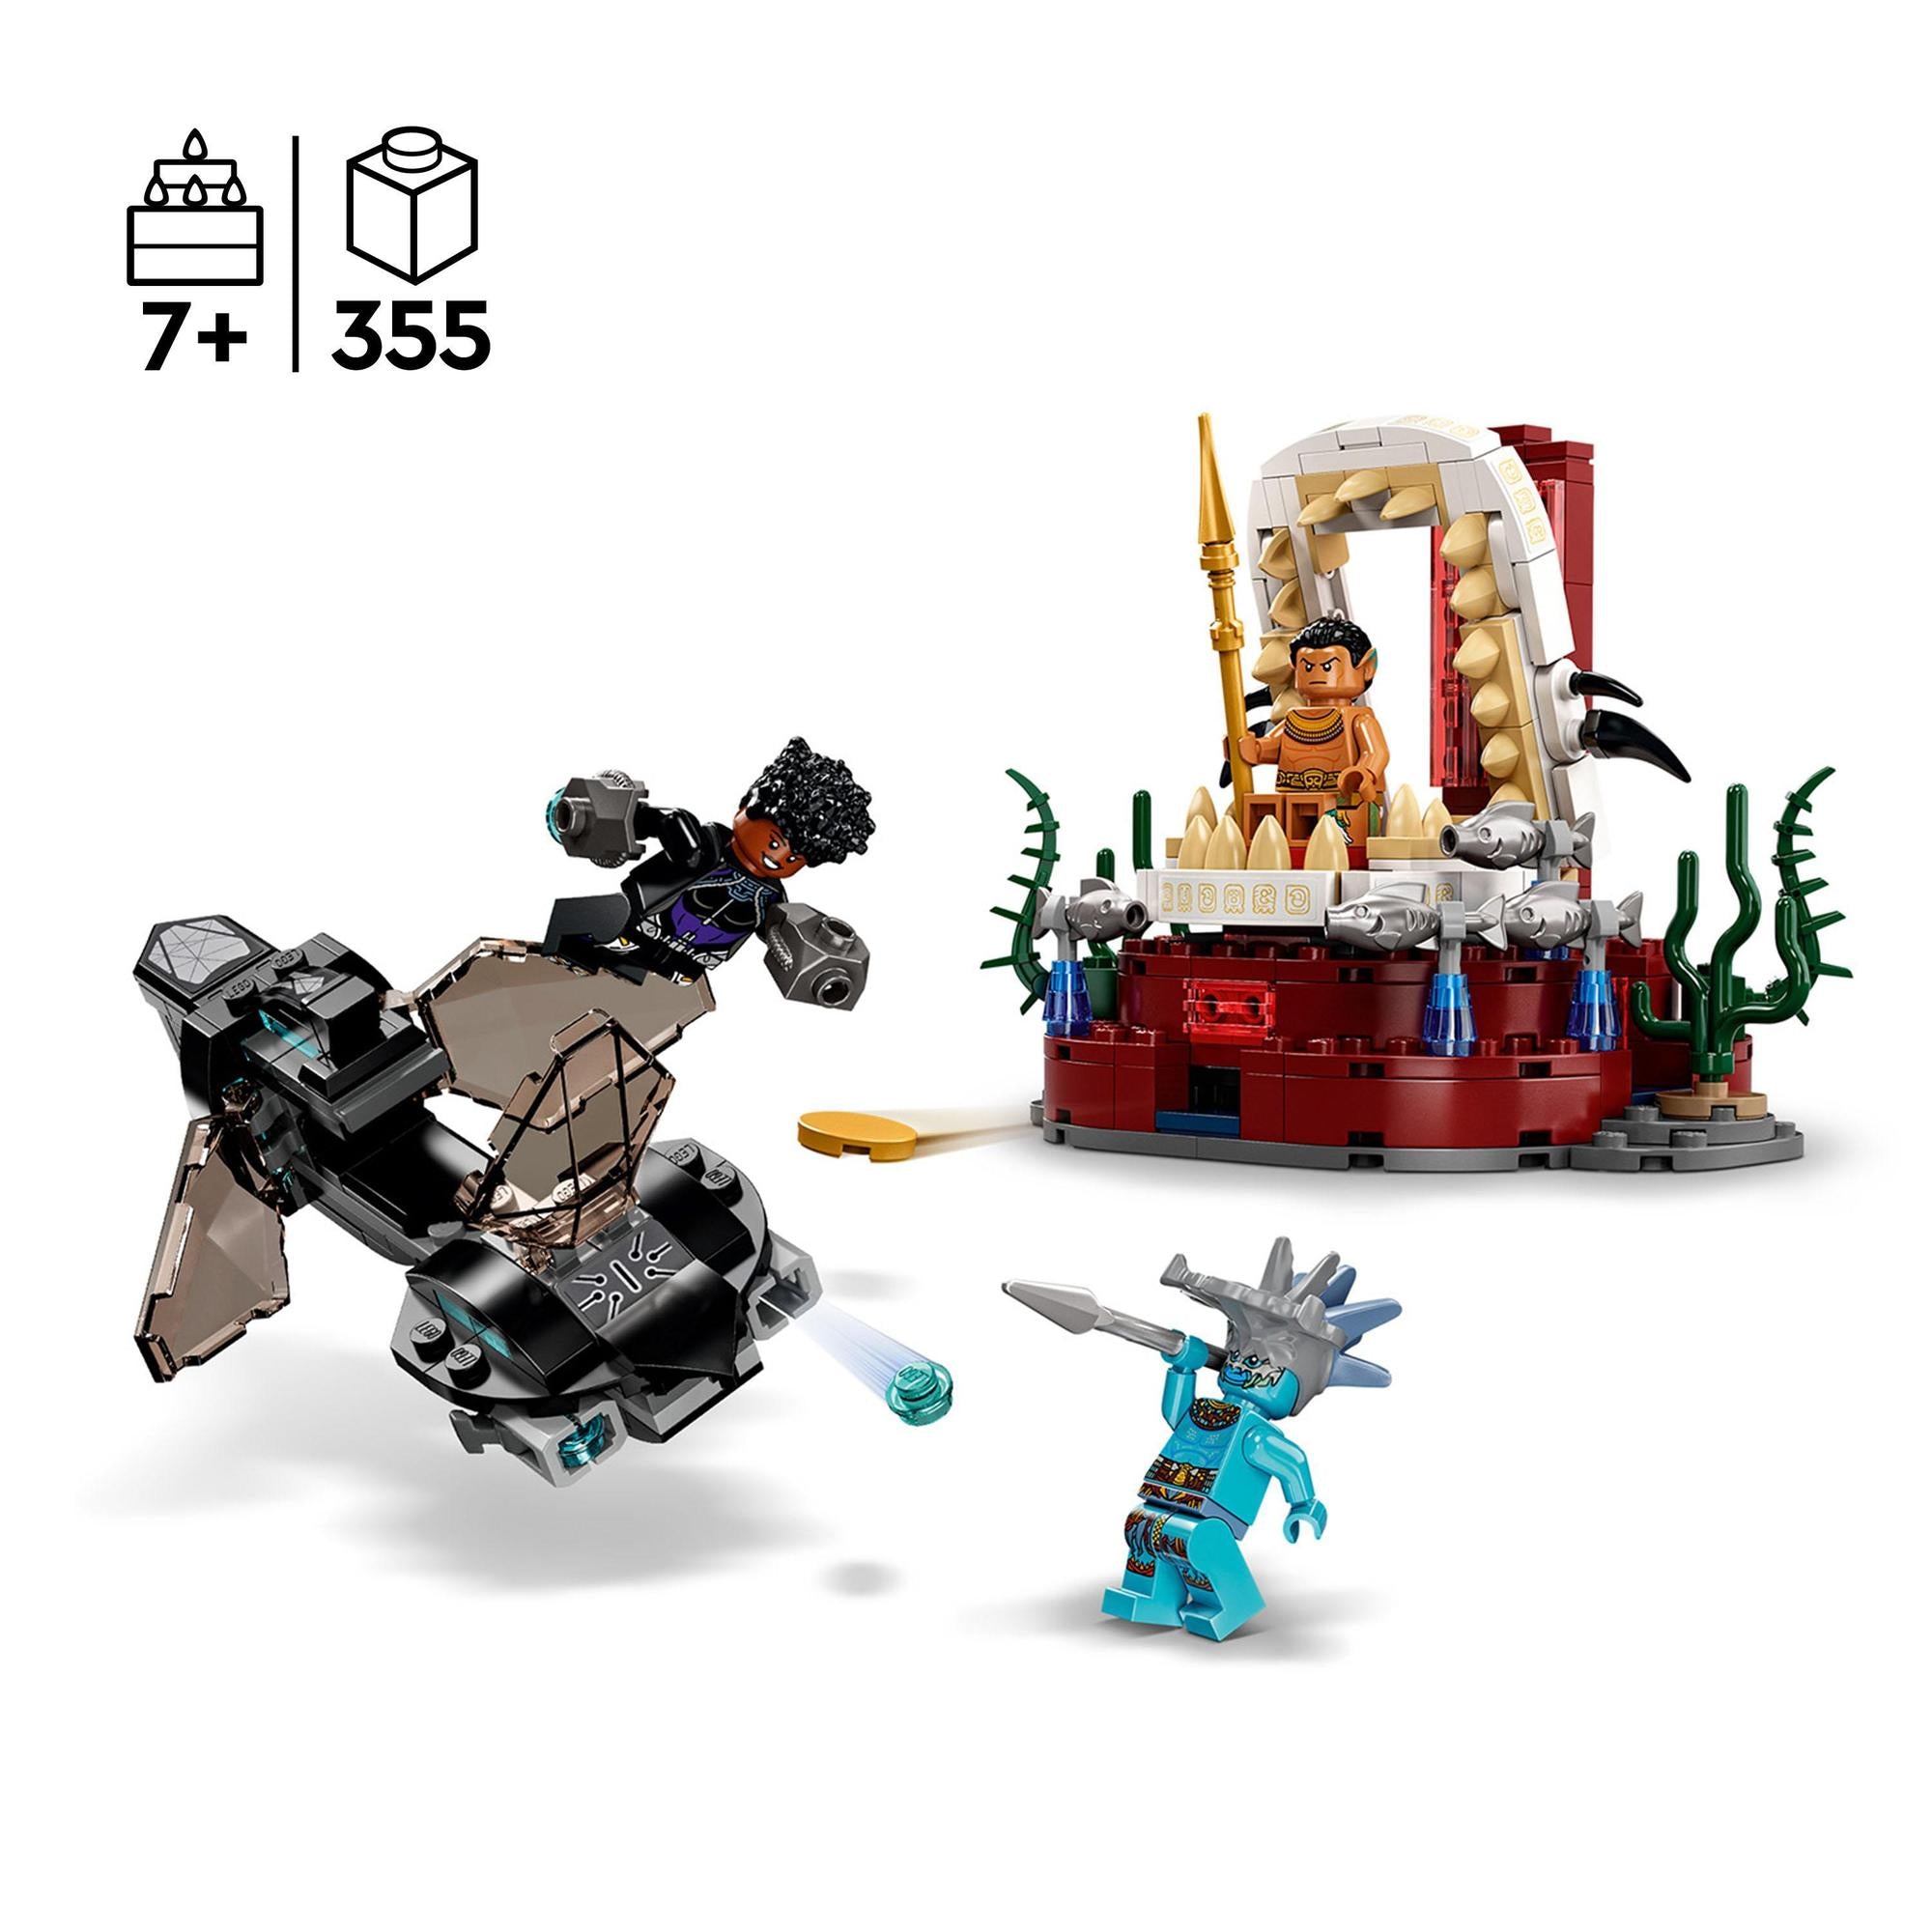 LEGO® | 76213 | König Namors Thronsaal